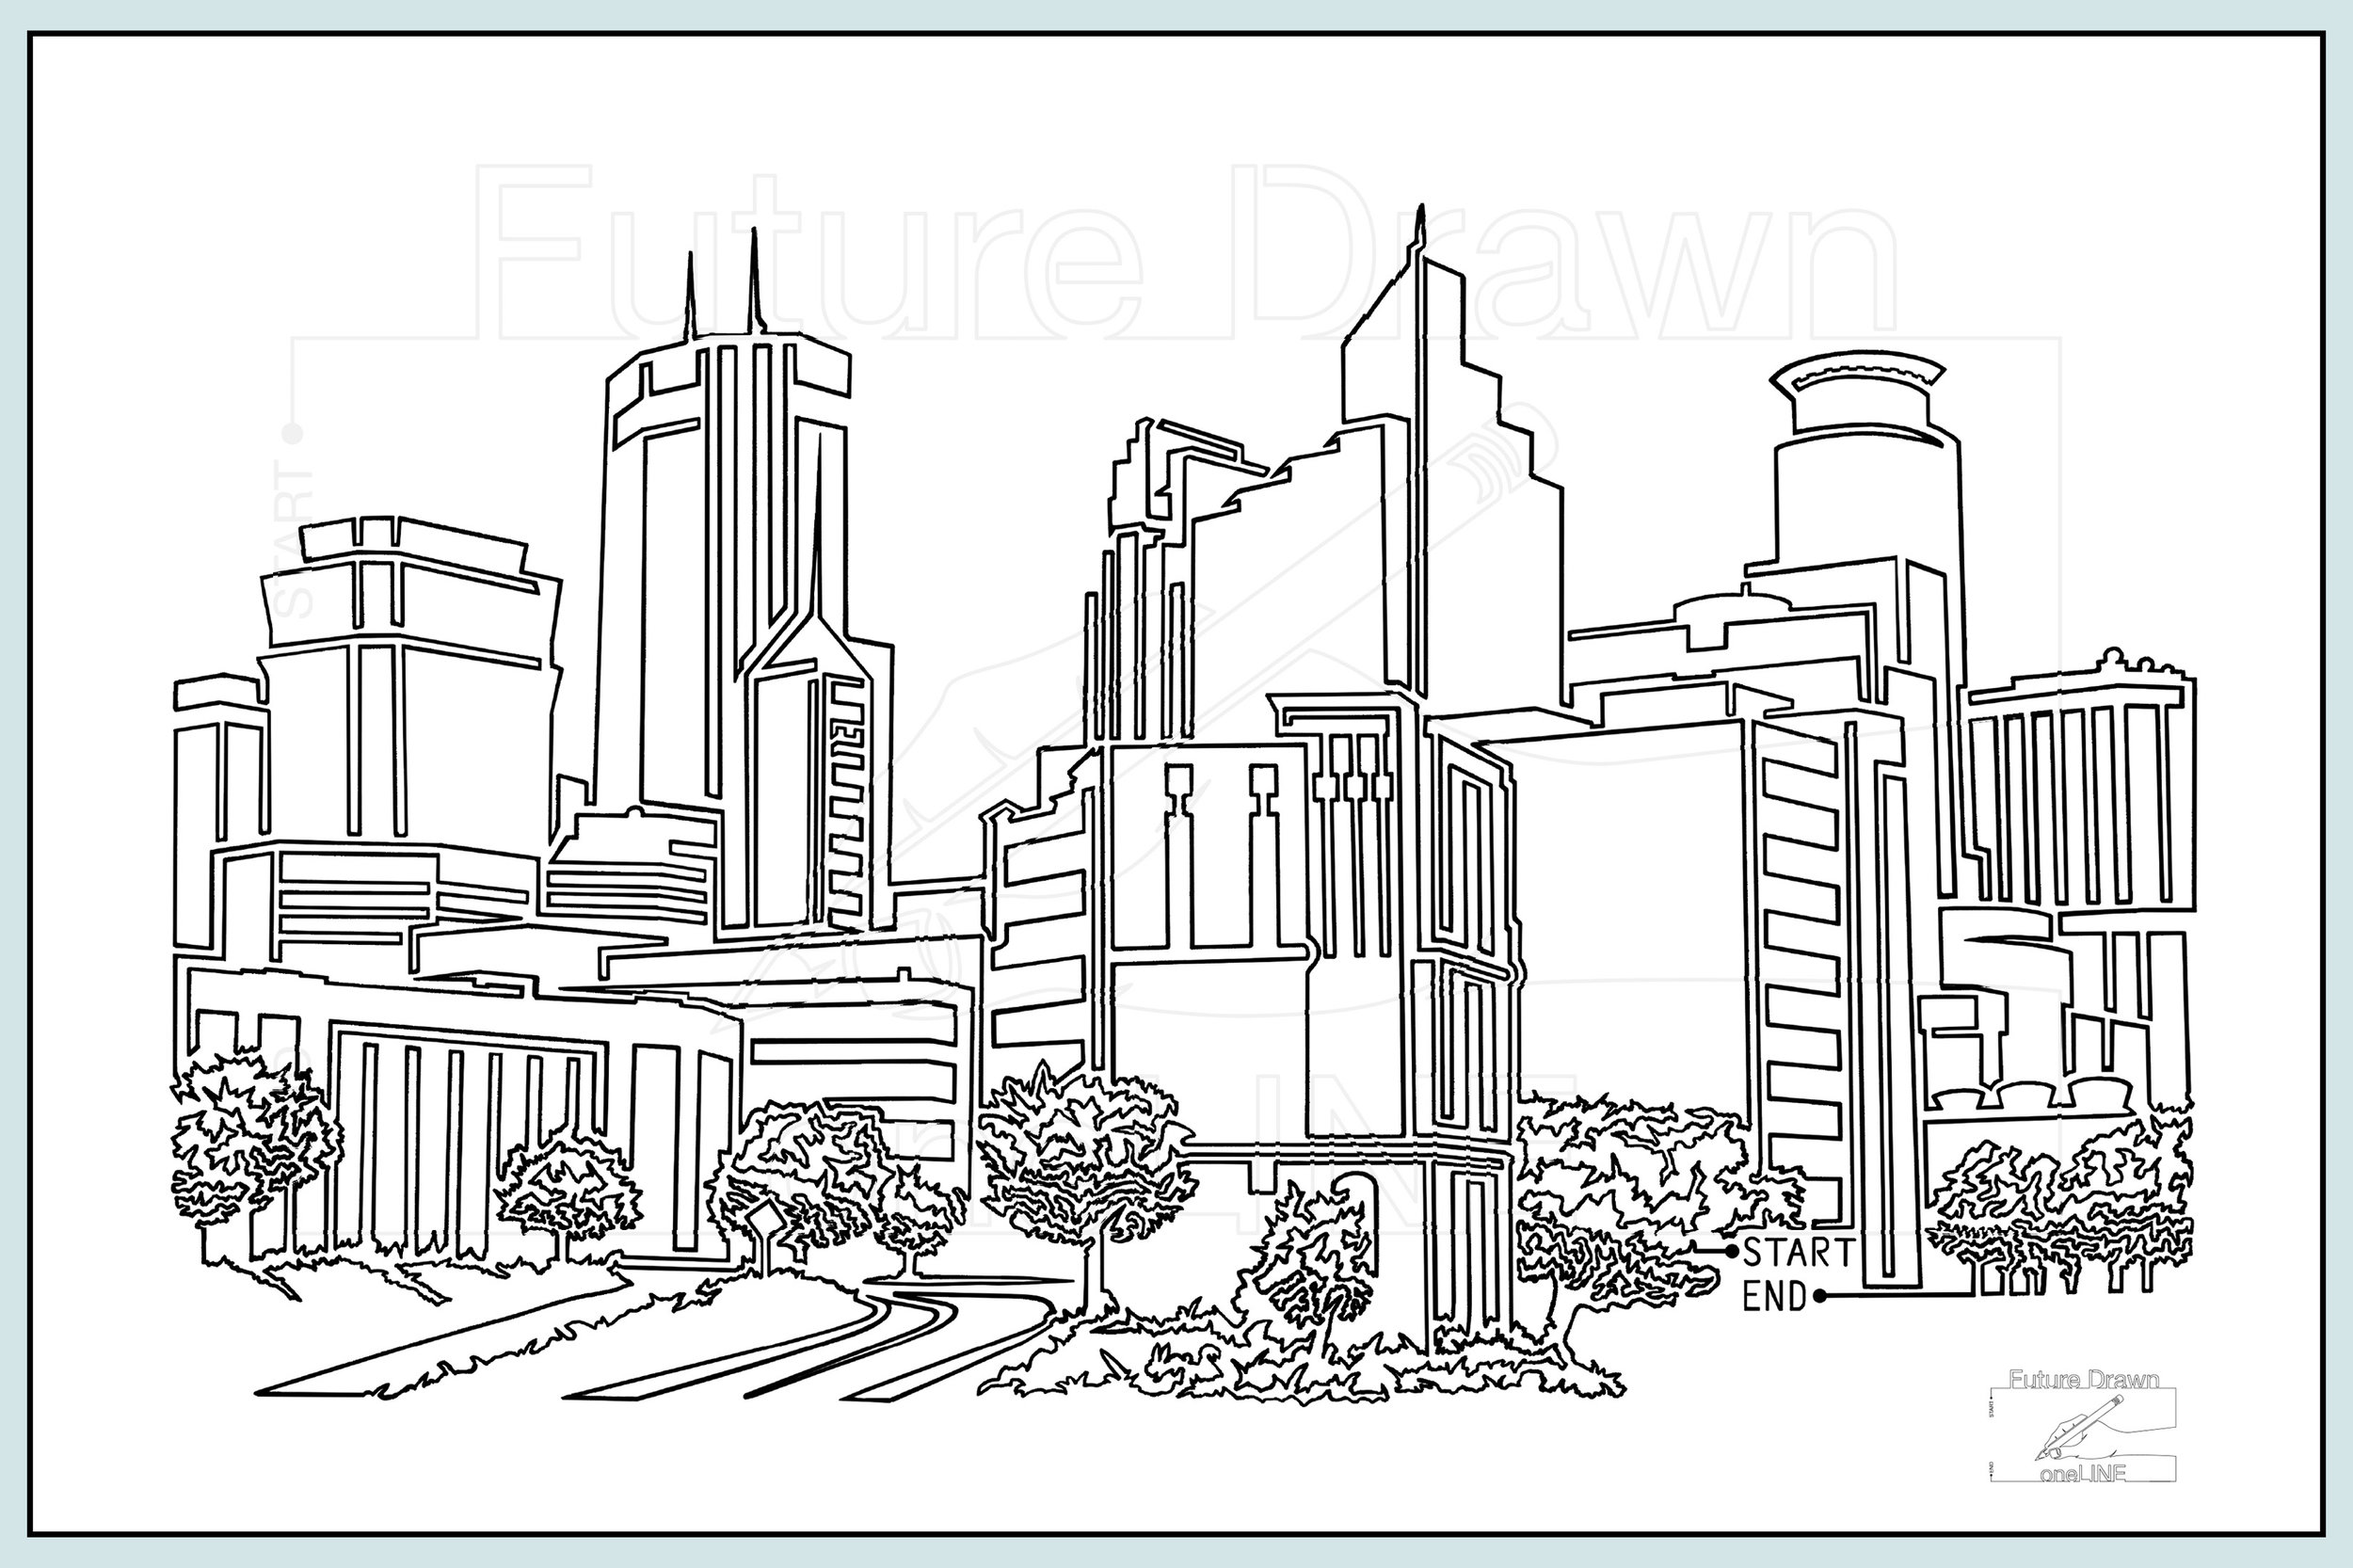 Web-Gallery Item- Miniapolis Skyline- oneLINE Future Drawn Applegate.jpg